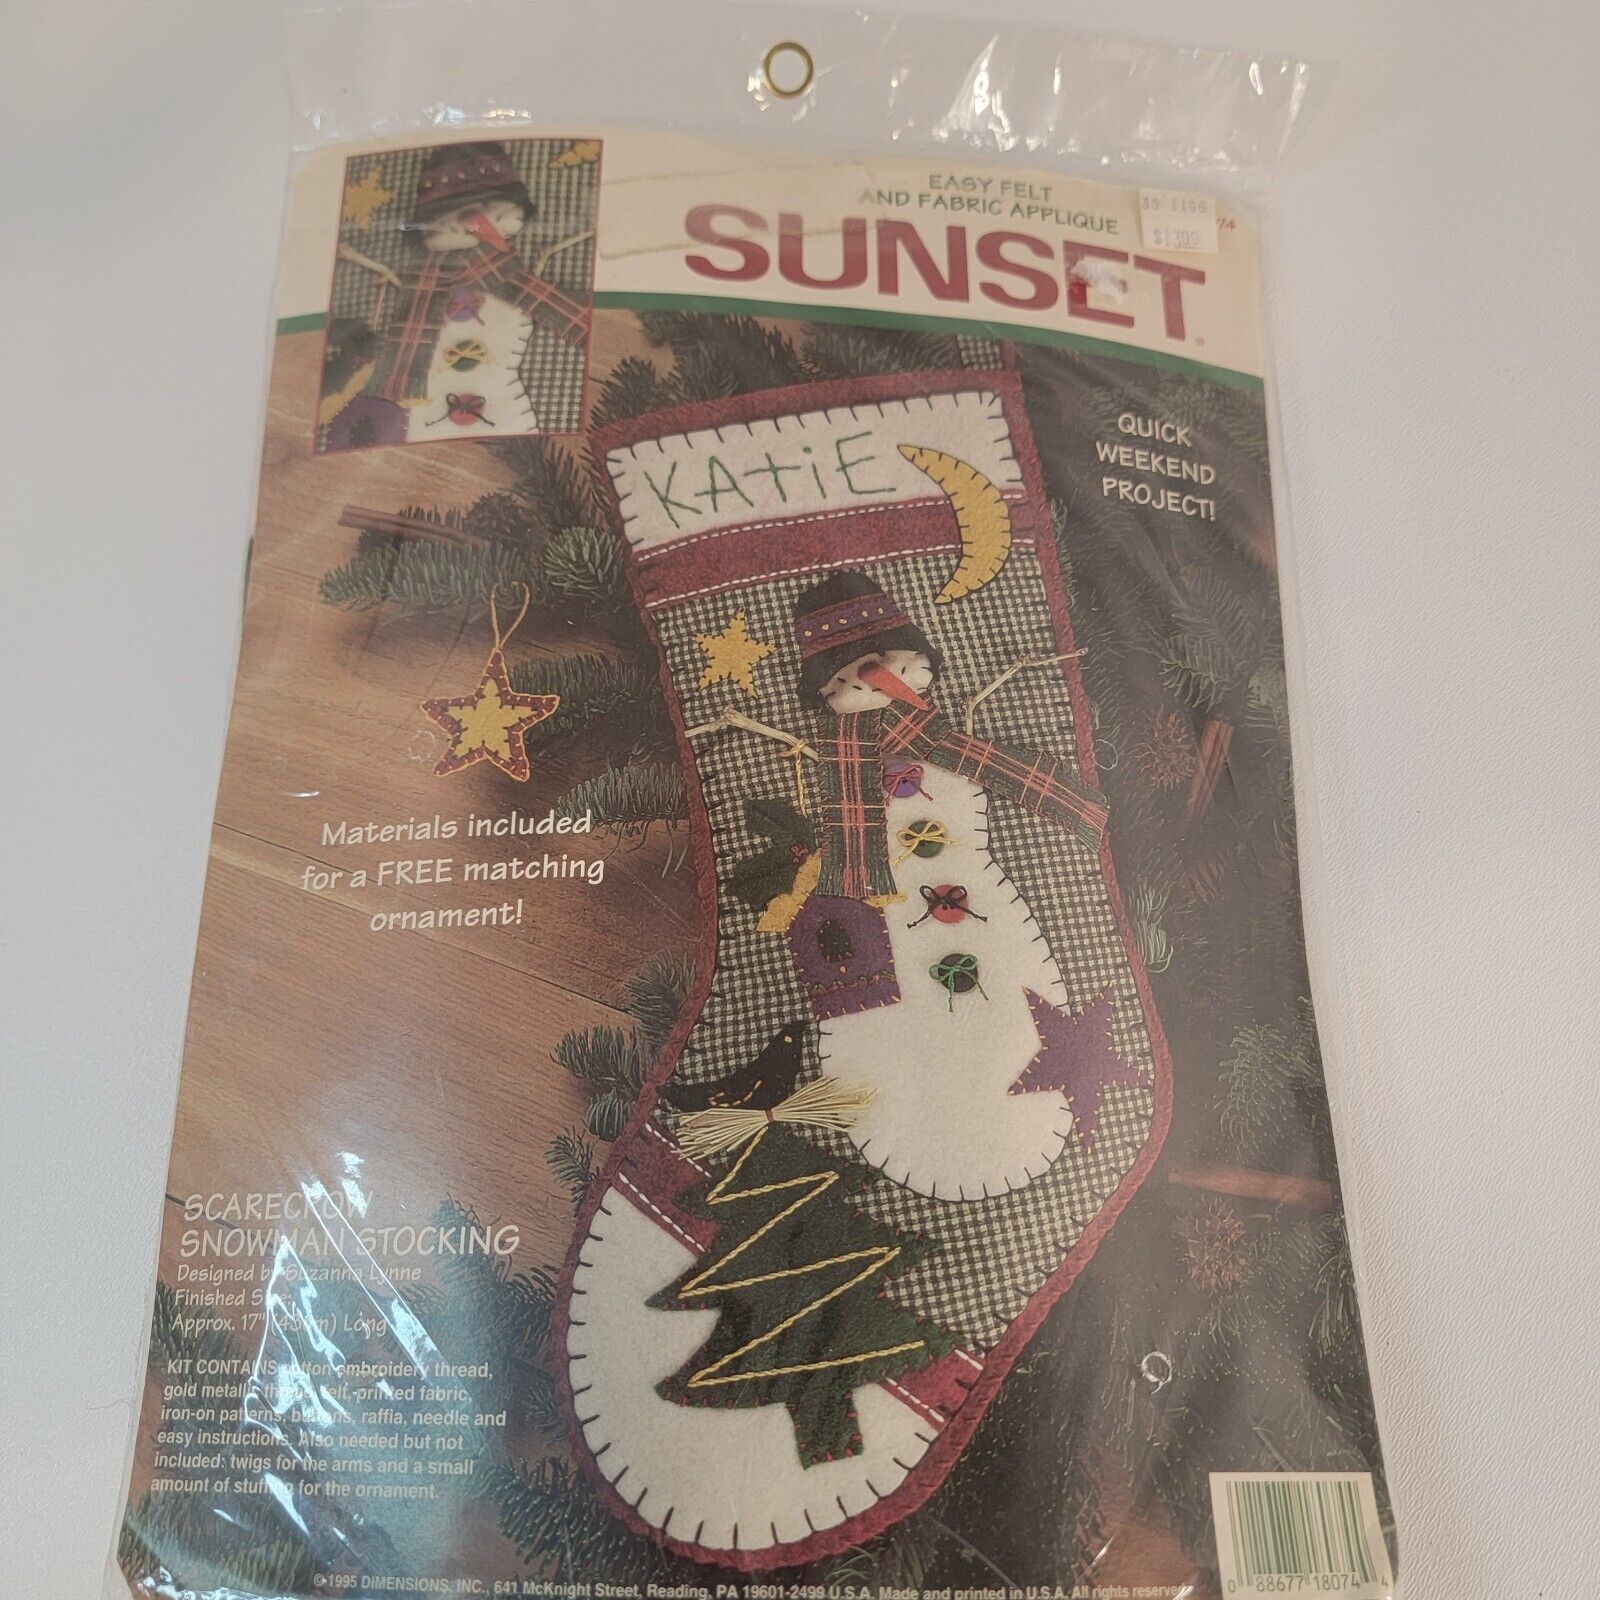 Christmas Sunset Scarecrow Snowman Stocking Felt Applique Kit 1995 Felt 18074